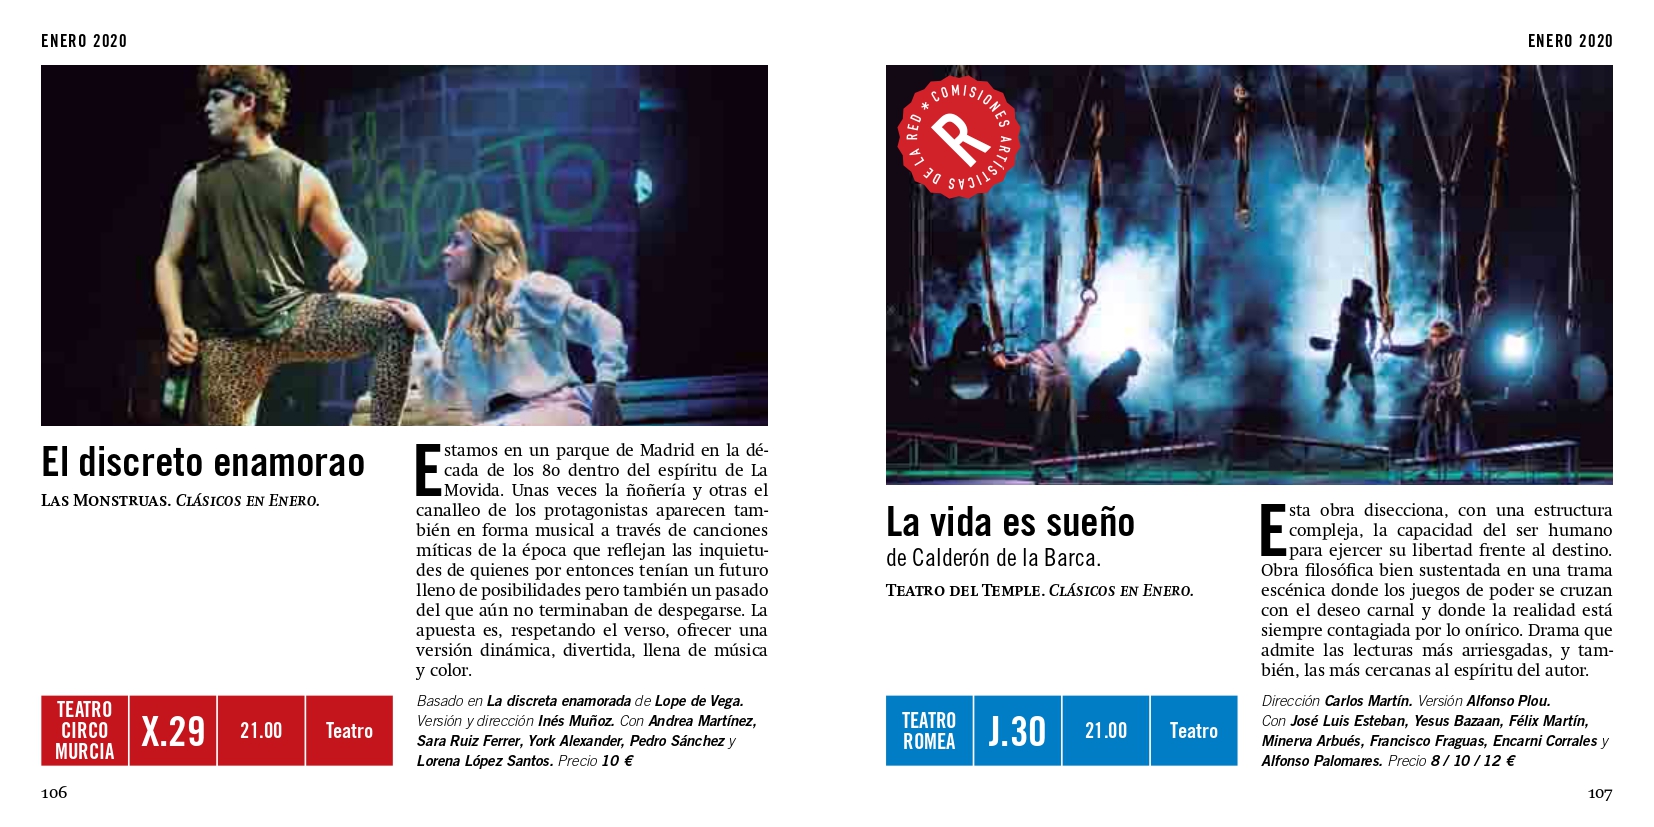 teatro-romea-teatro circo-temporada-1_page-0054.jpg